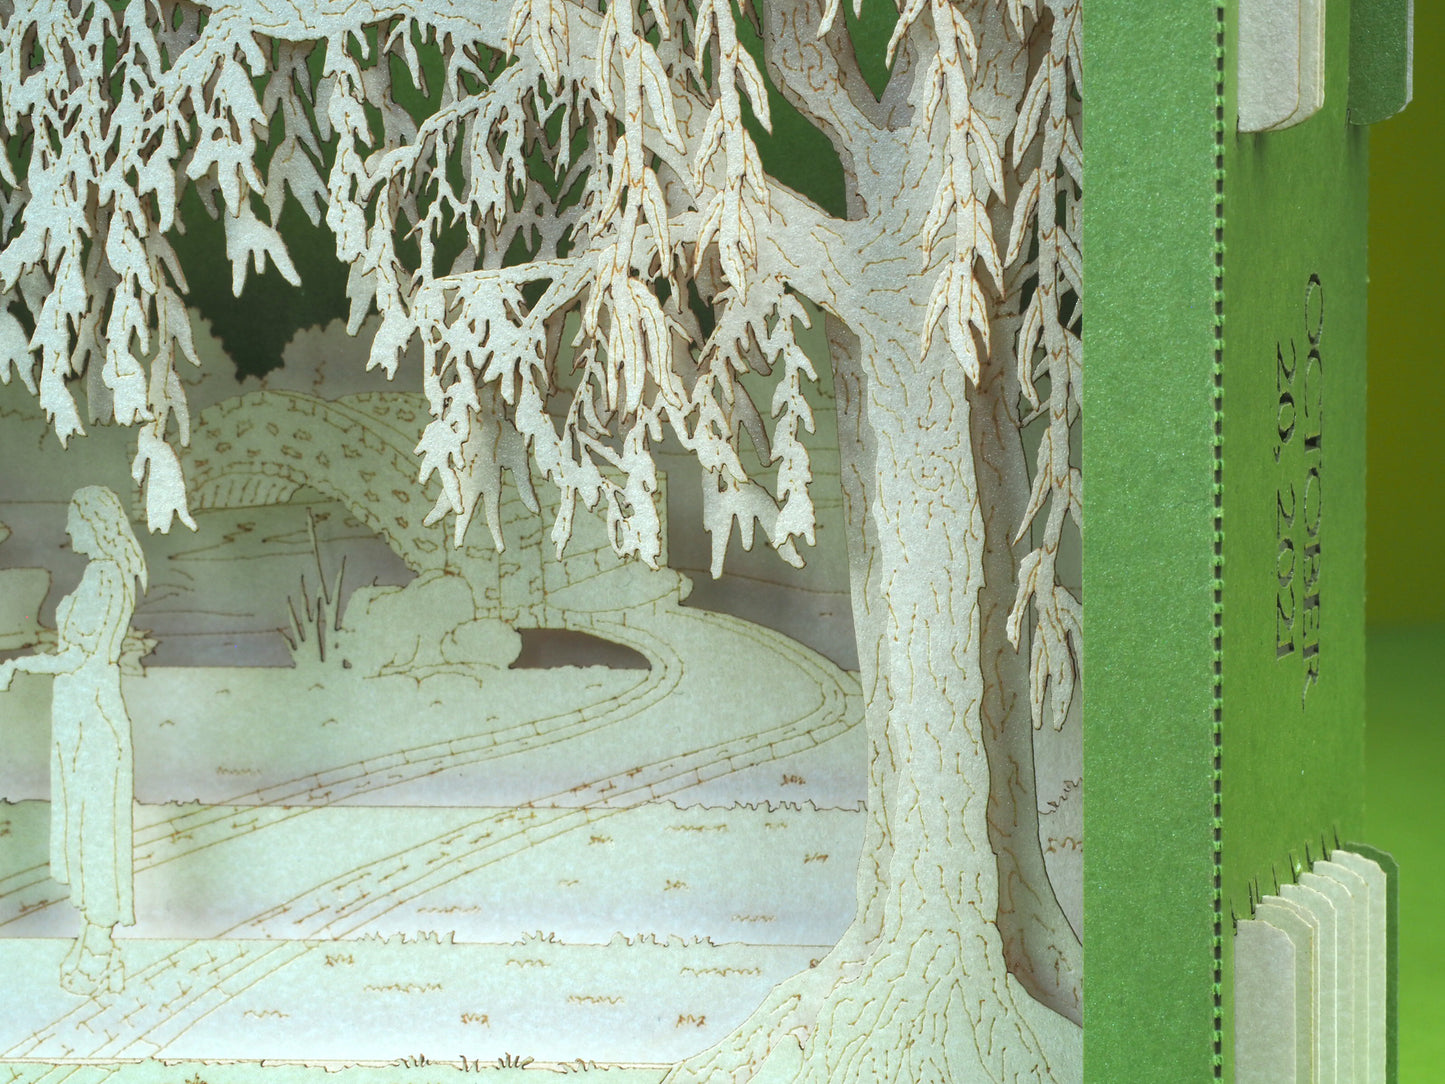 Elopement wedding card. Willow tree, bride, groom. Pop up 3 box card. Announcement